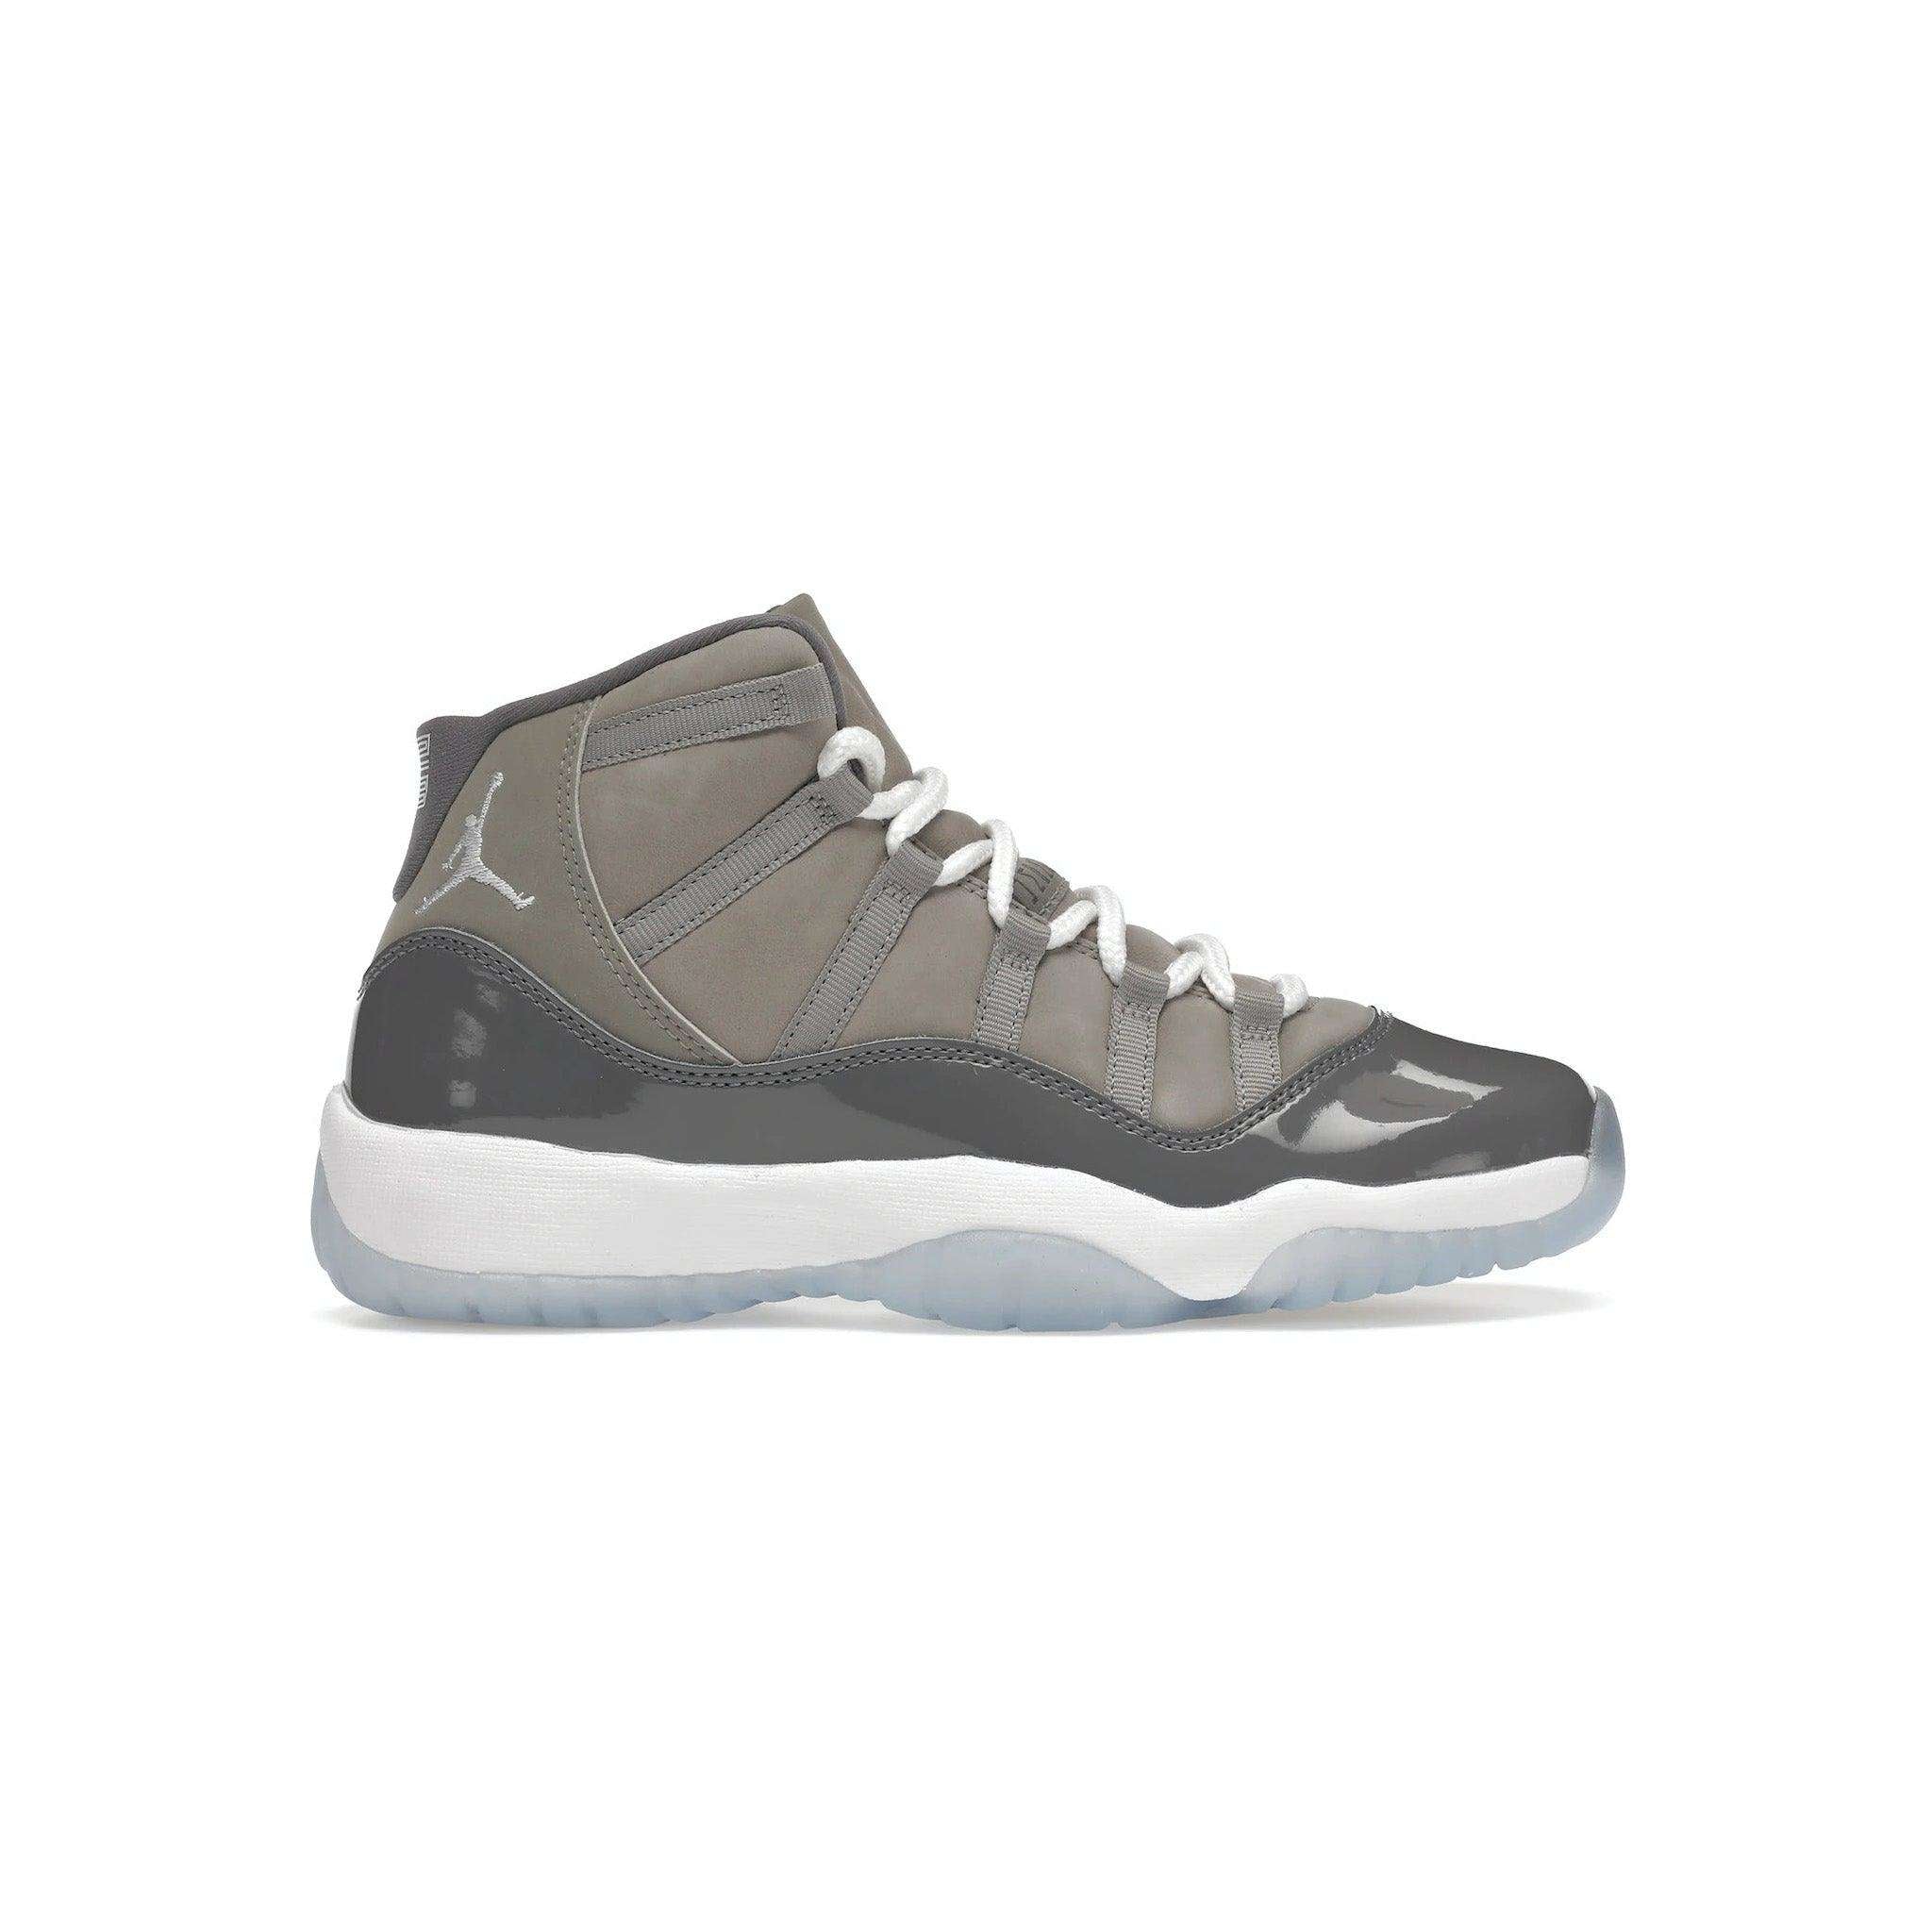 Jordan 11 Retro Cool Grey 2021 (GS)